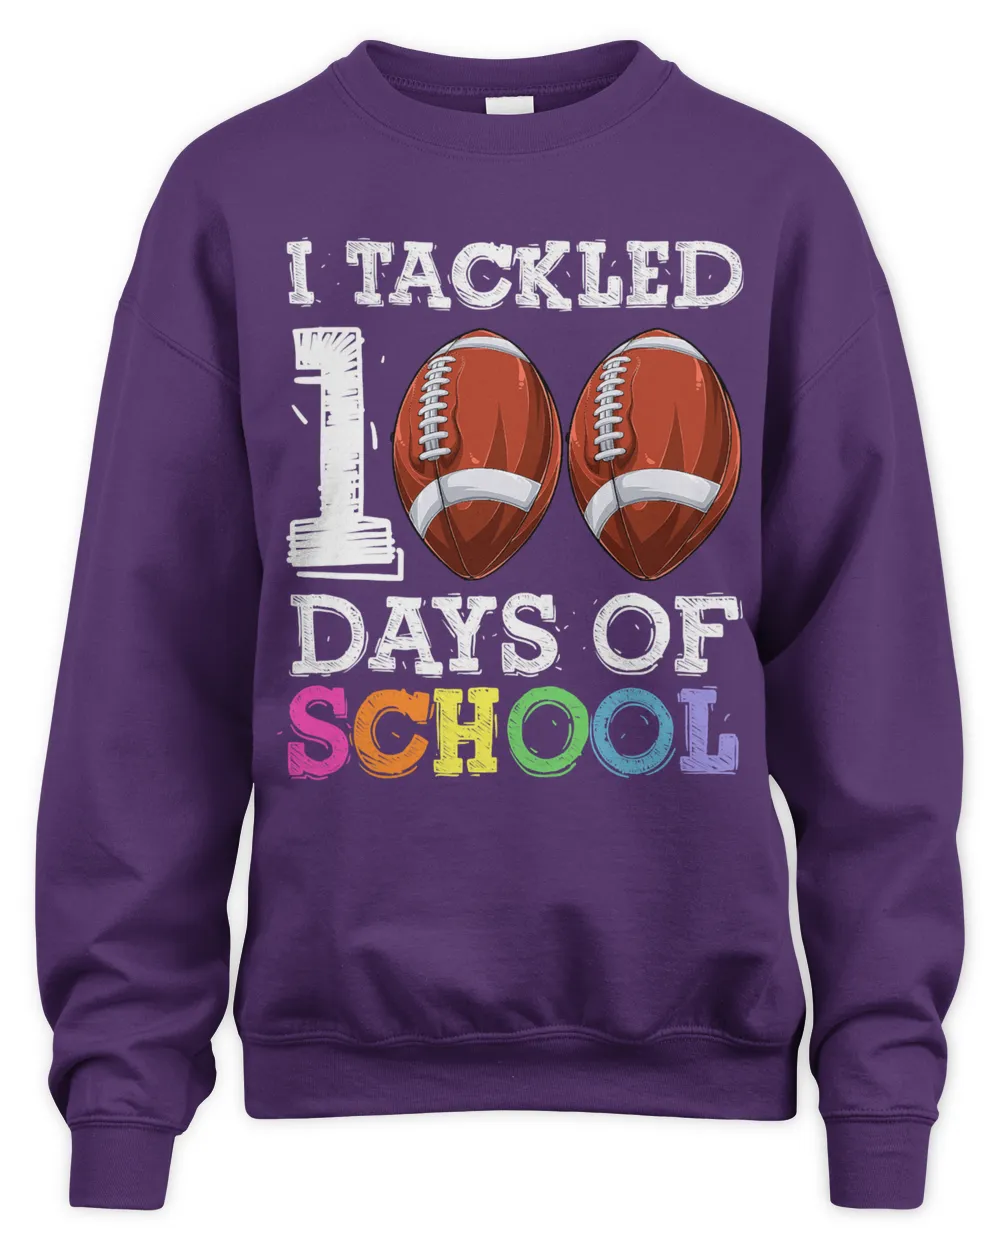 100 Day Of School Shirt Kids Football Tackled 100 days Boy0